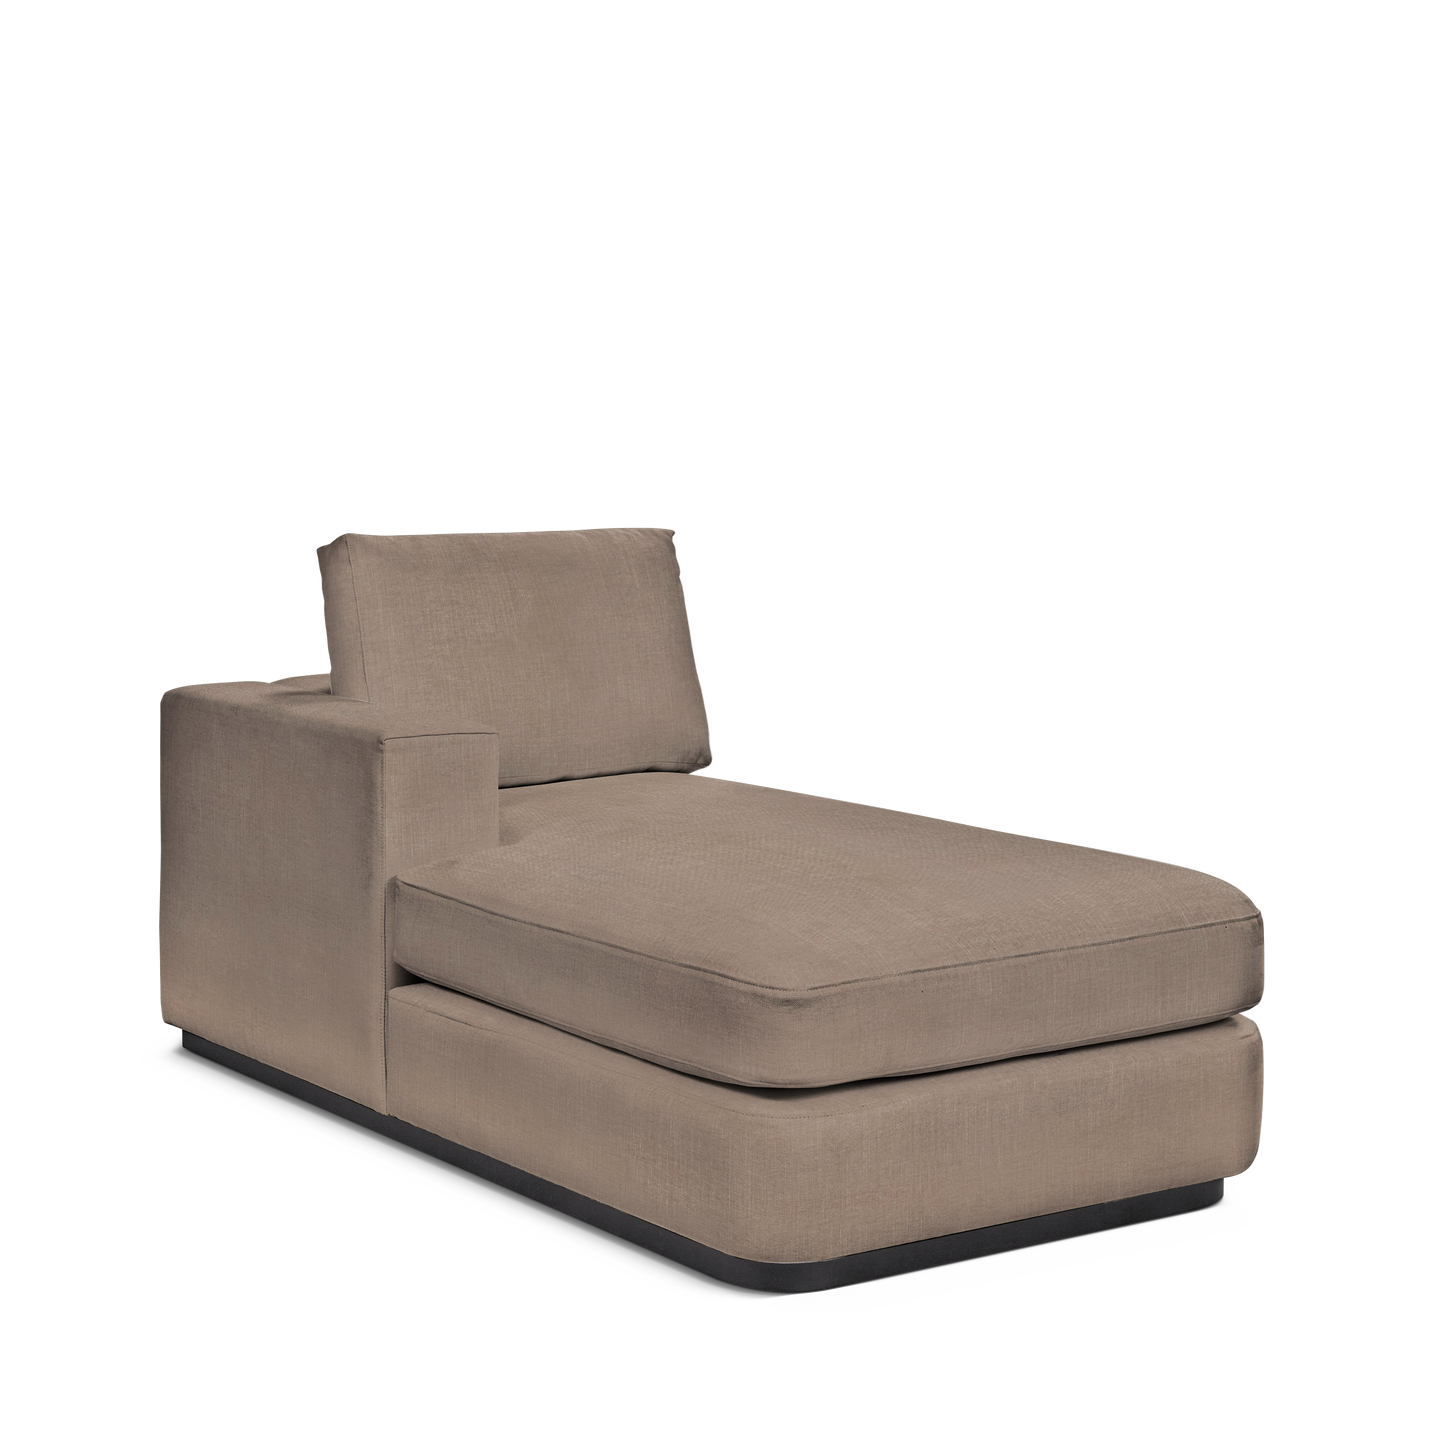 ATLAS 90 Lounge Bed arm rest left with light brown textile